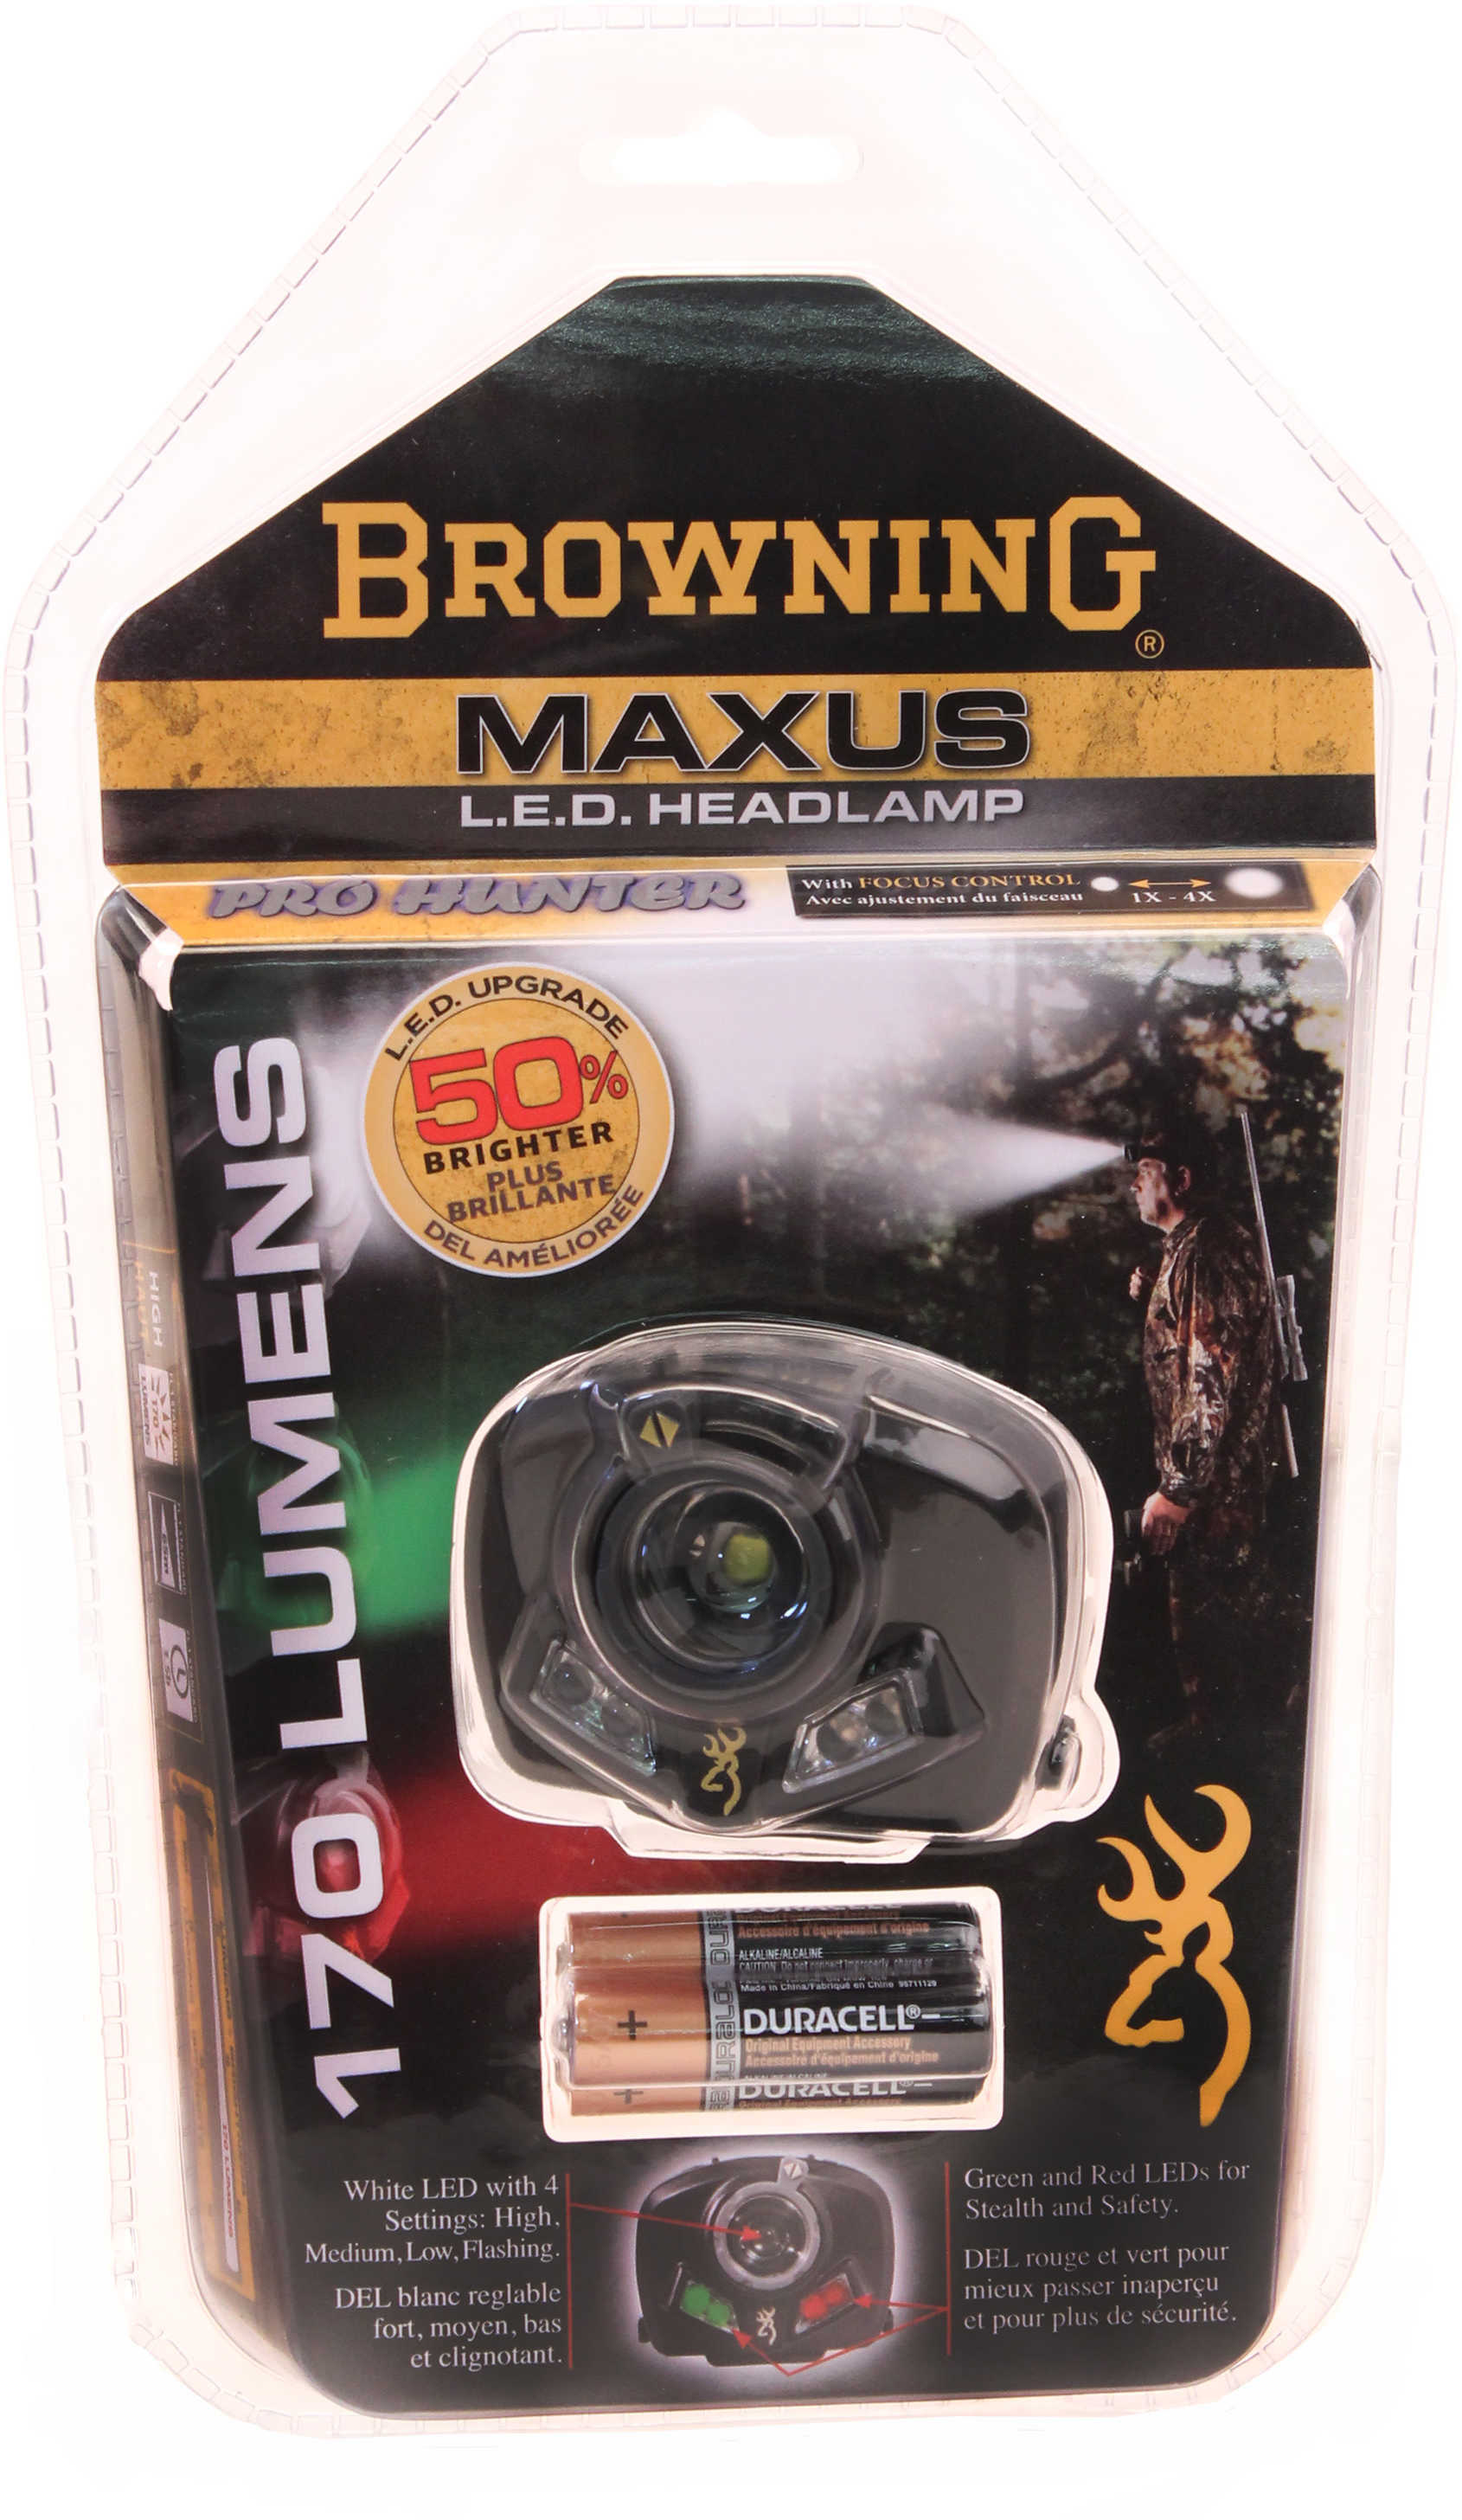 Browning Pro Hunter LED Light Maxus, Headlamp, Black 3713329